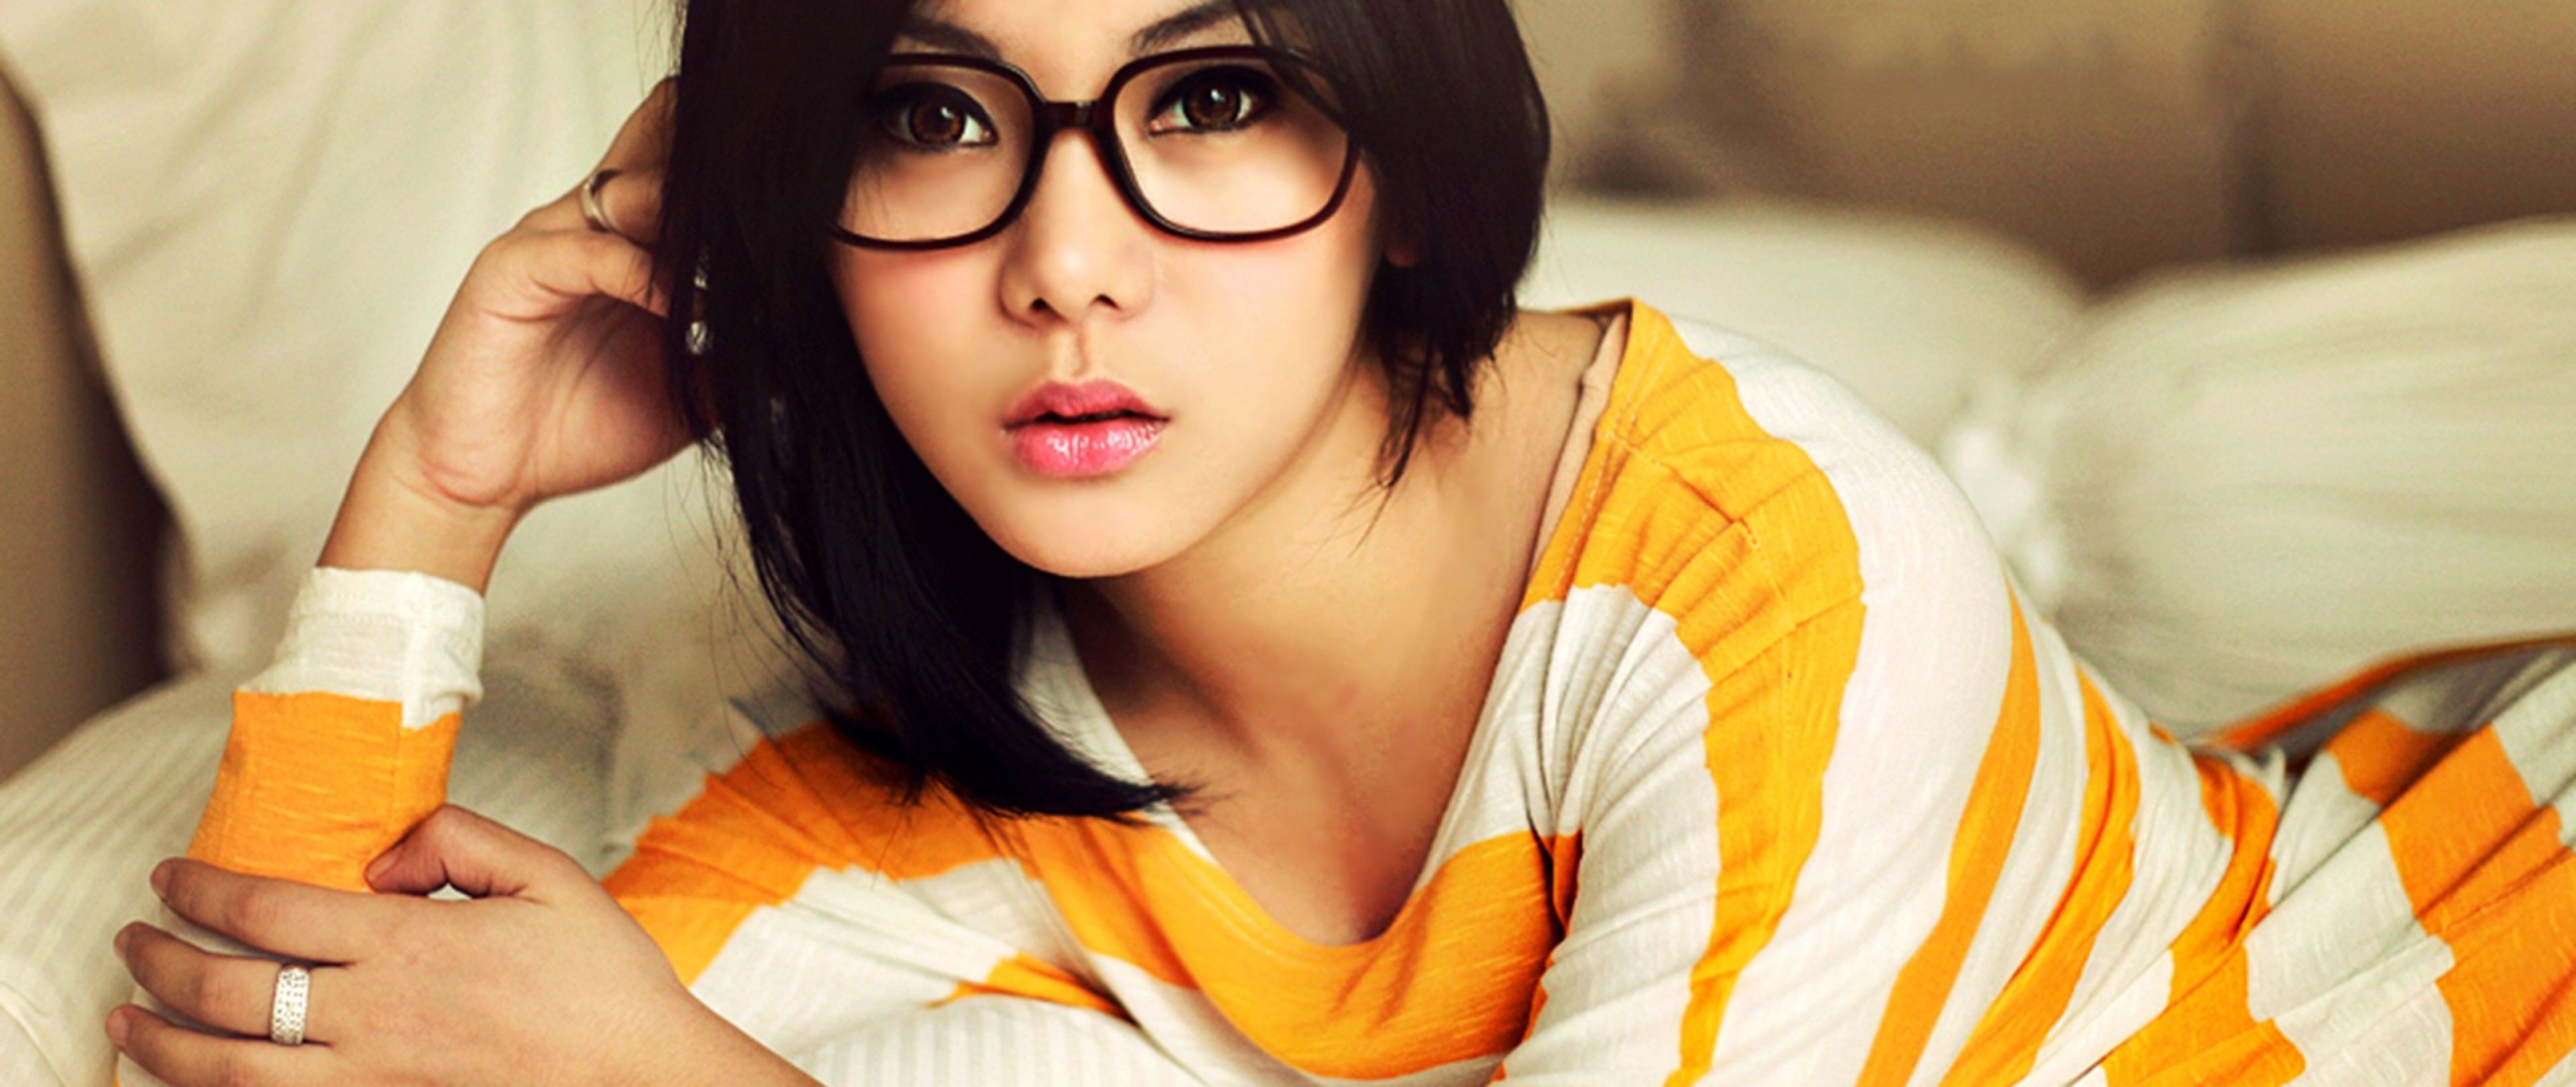 Cute Girl With Glasses HD Wallpaper 4K Ultra HD Wide TV